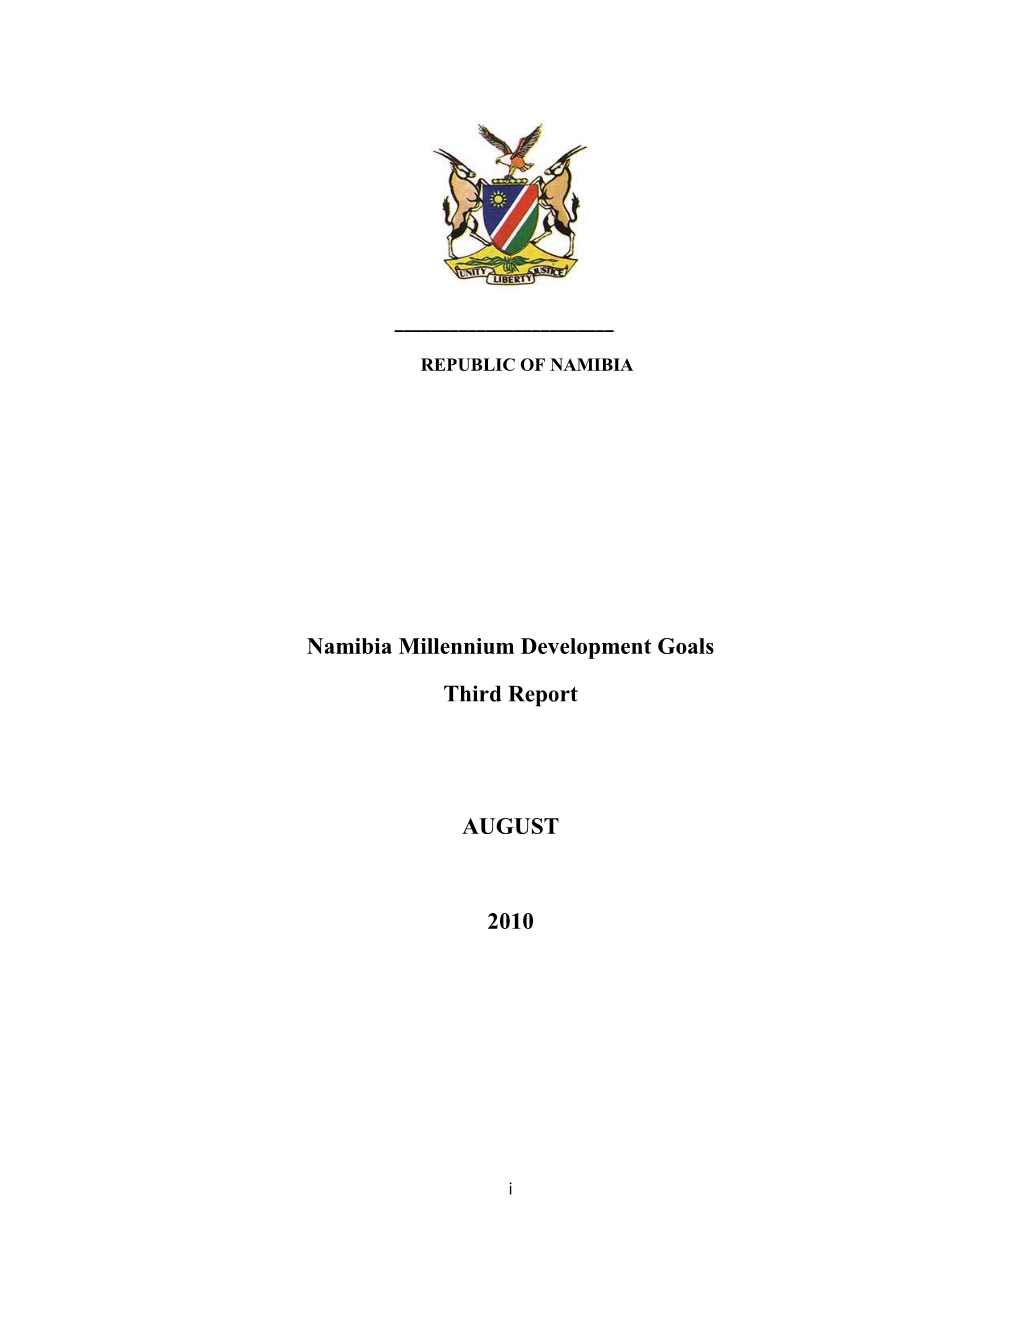 Namibia Millennium Development Goals Third Report AUGUST 2010